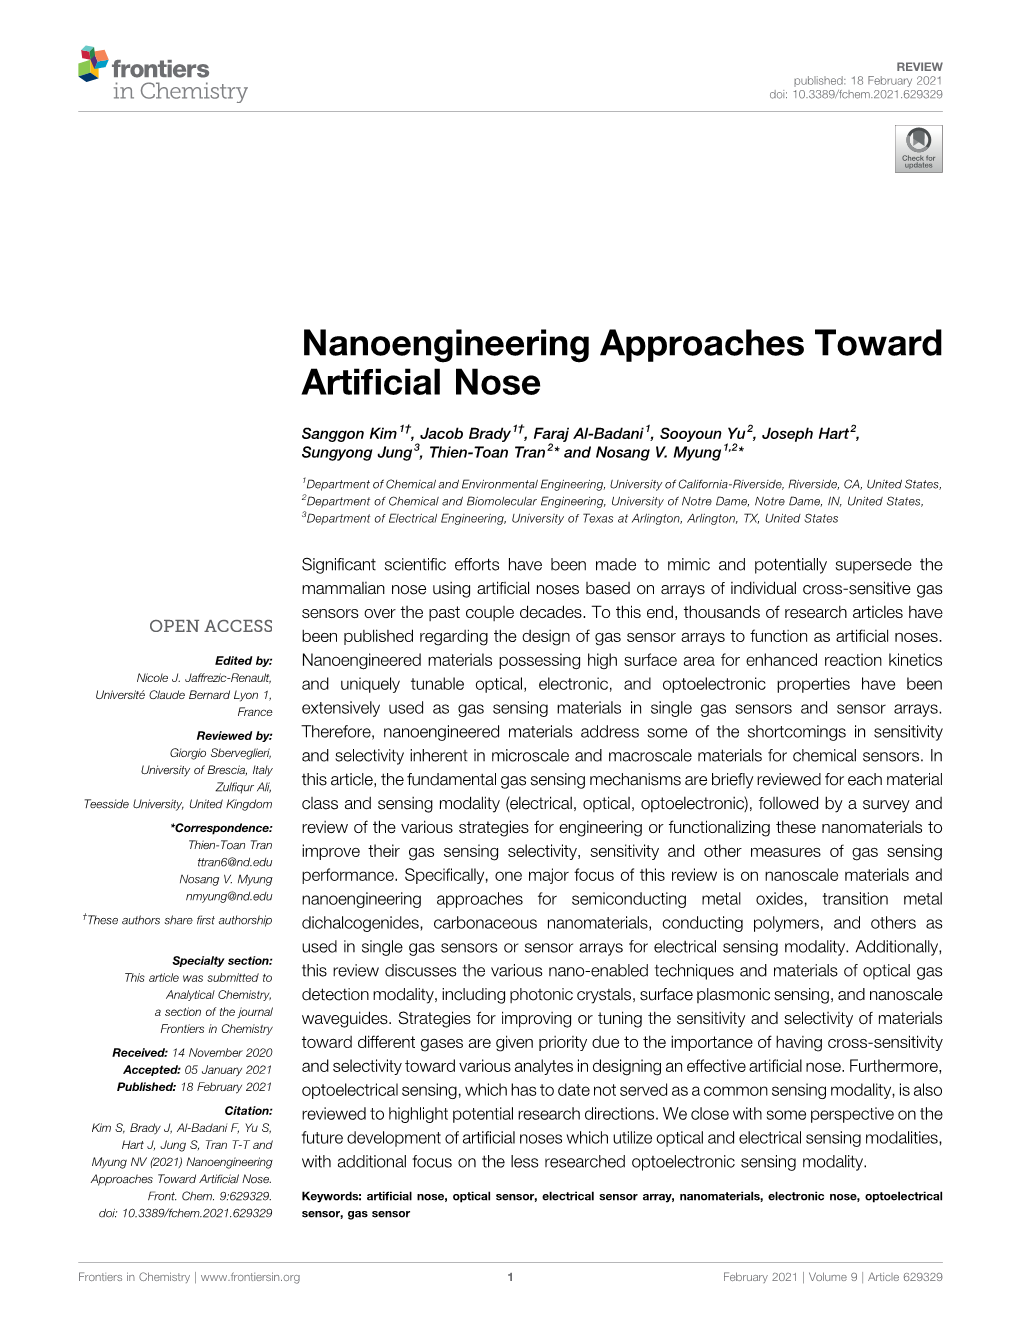 Nanoengineering Approaches Toward Artificial Nose